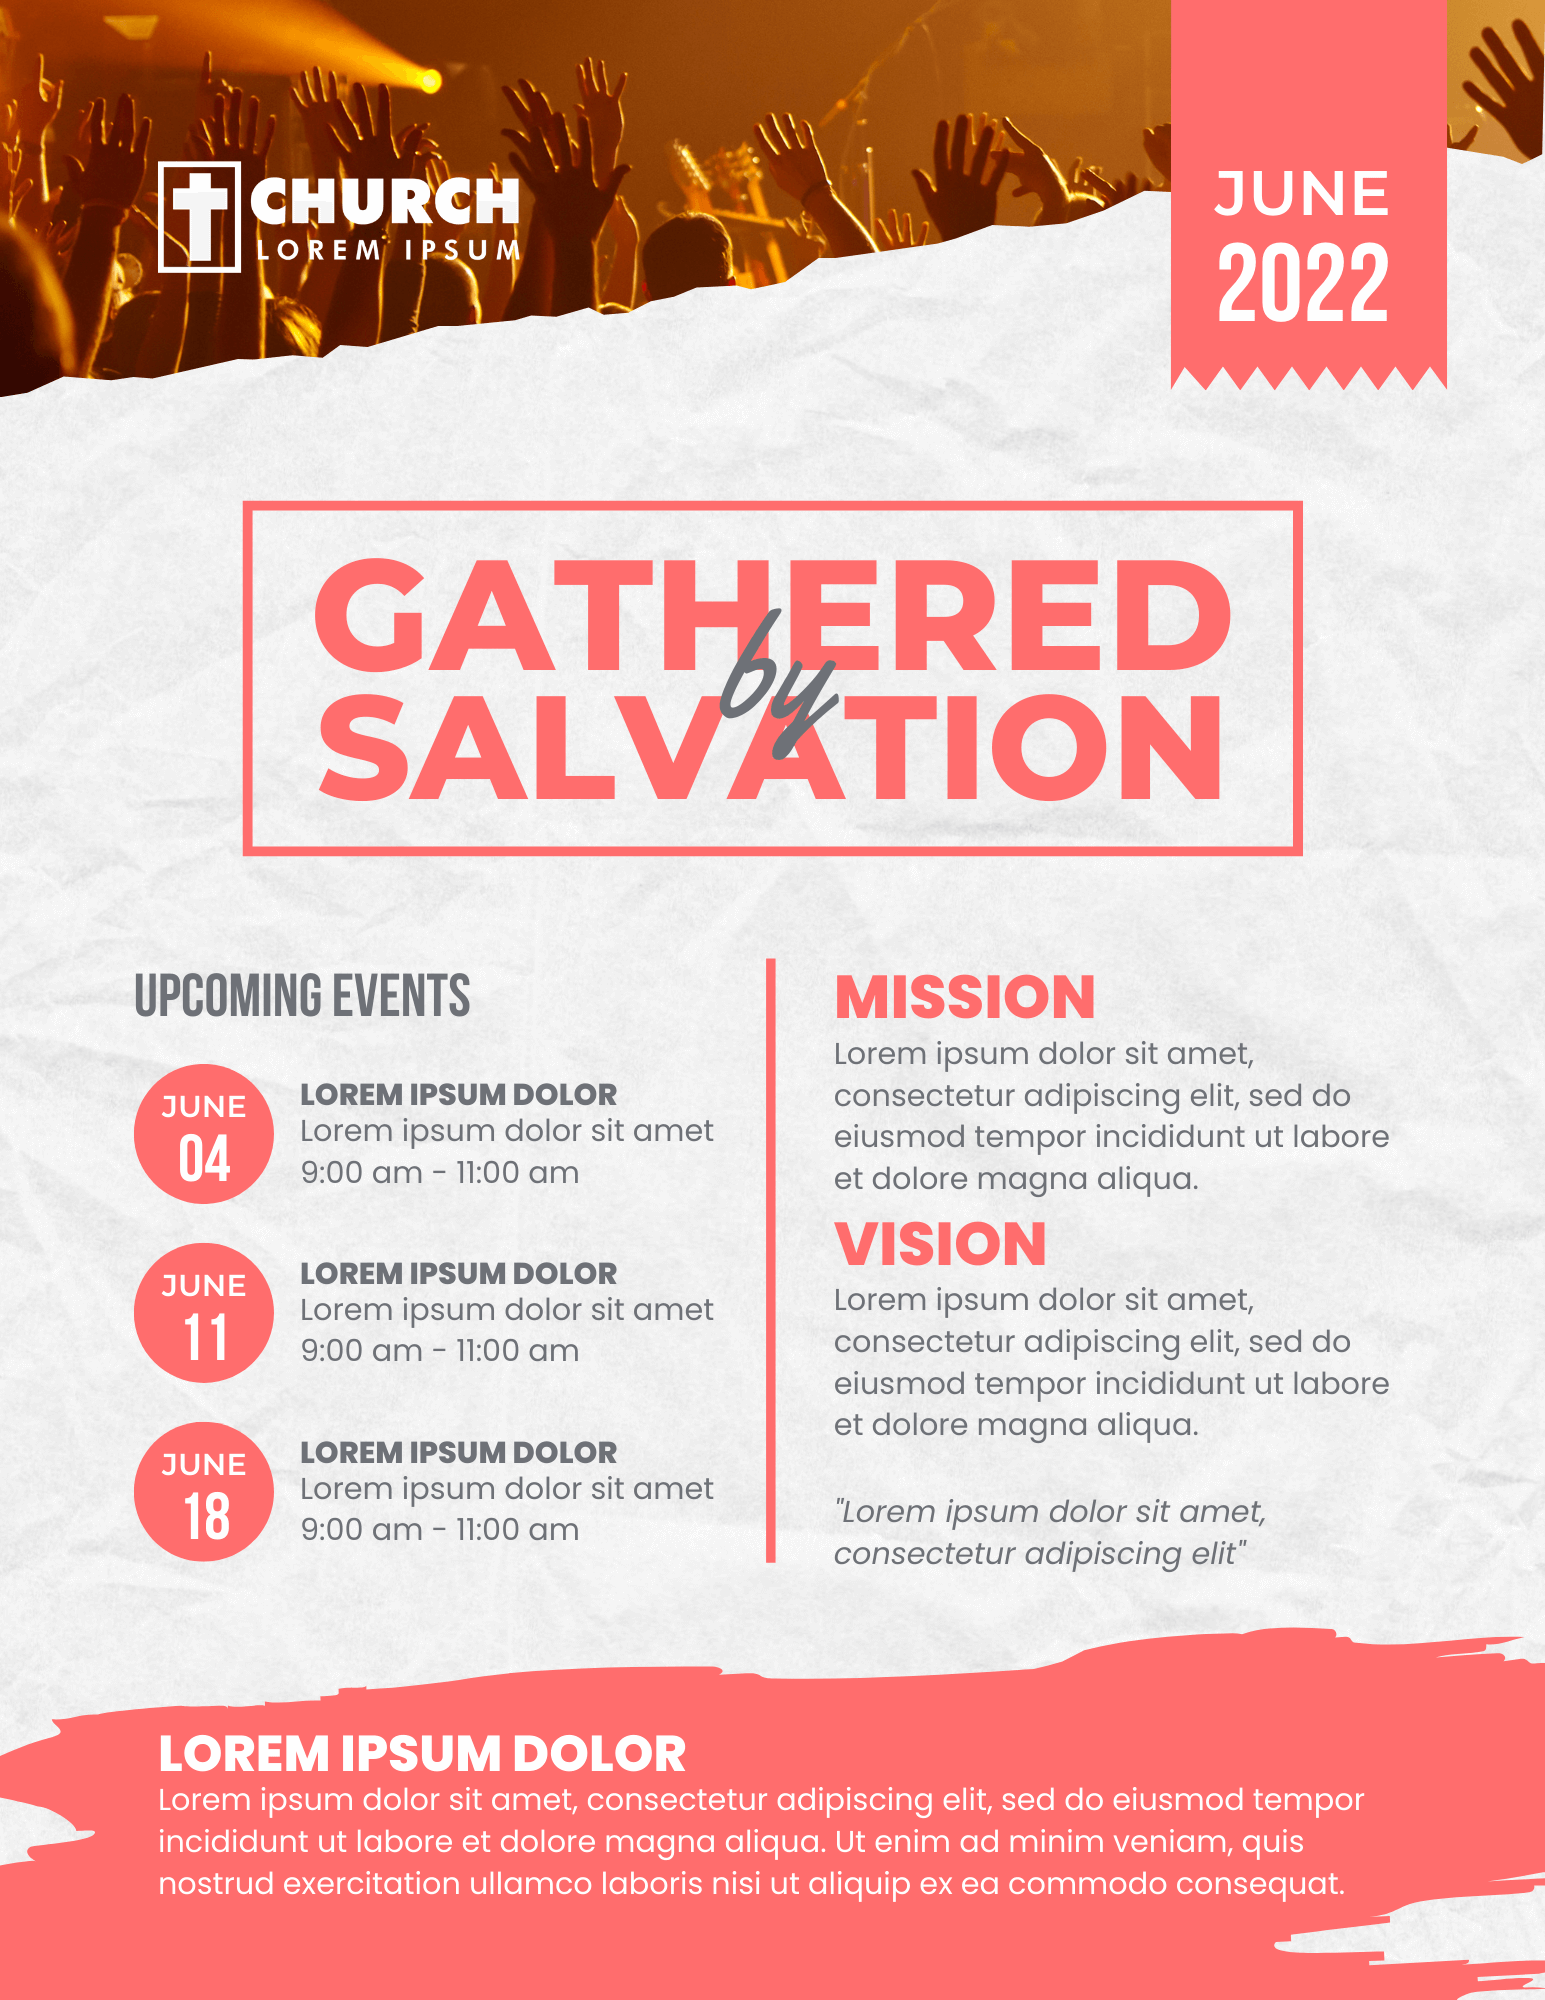 Church Bulletin Template - Gather Salvation